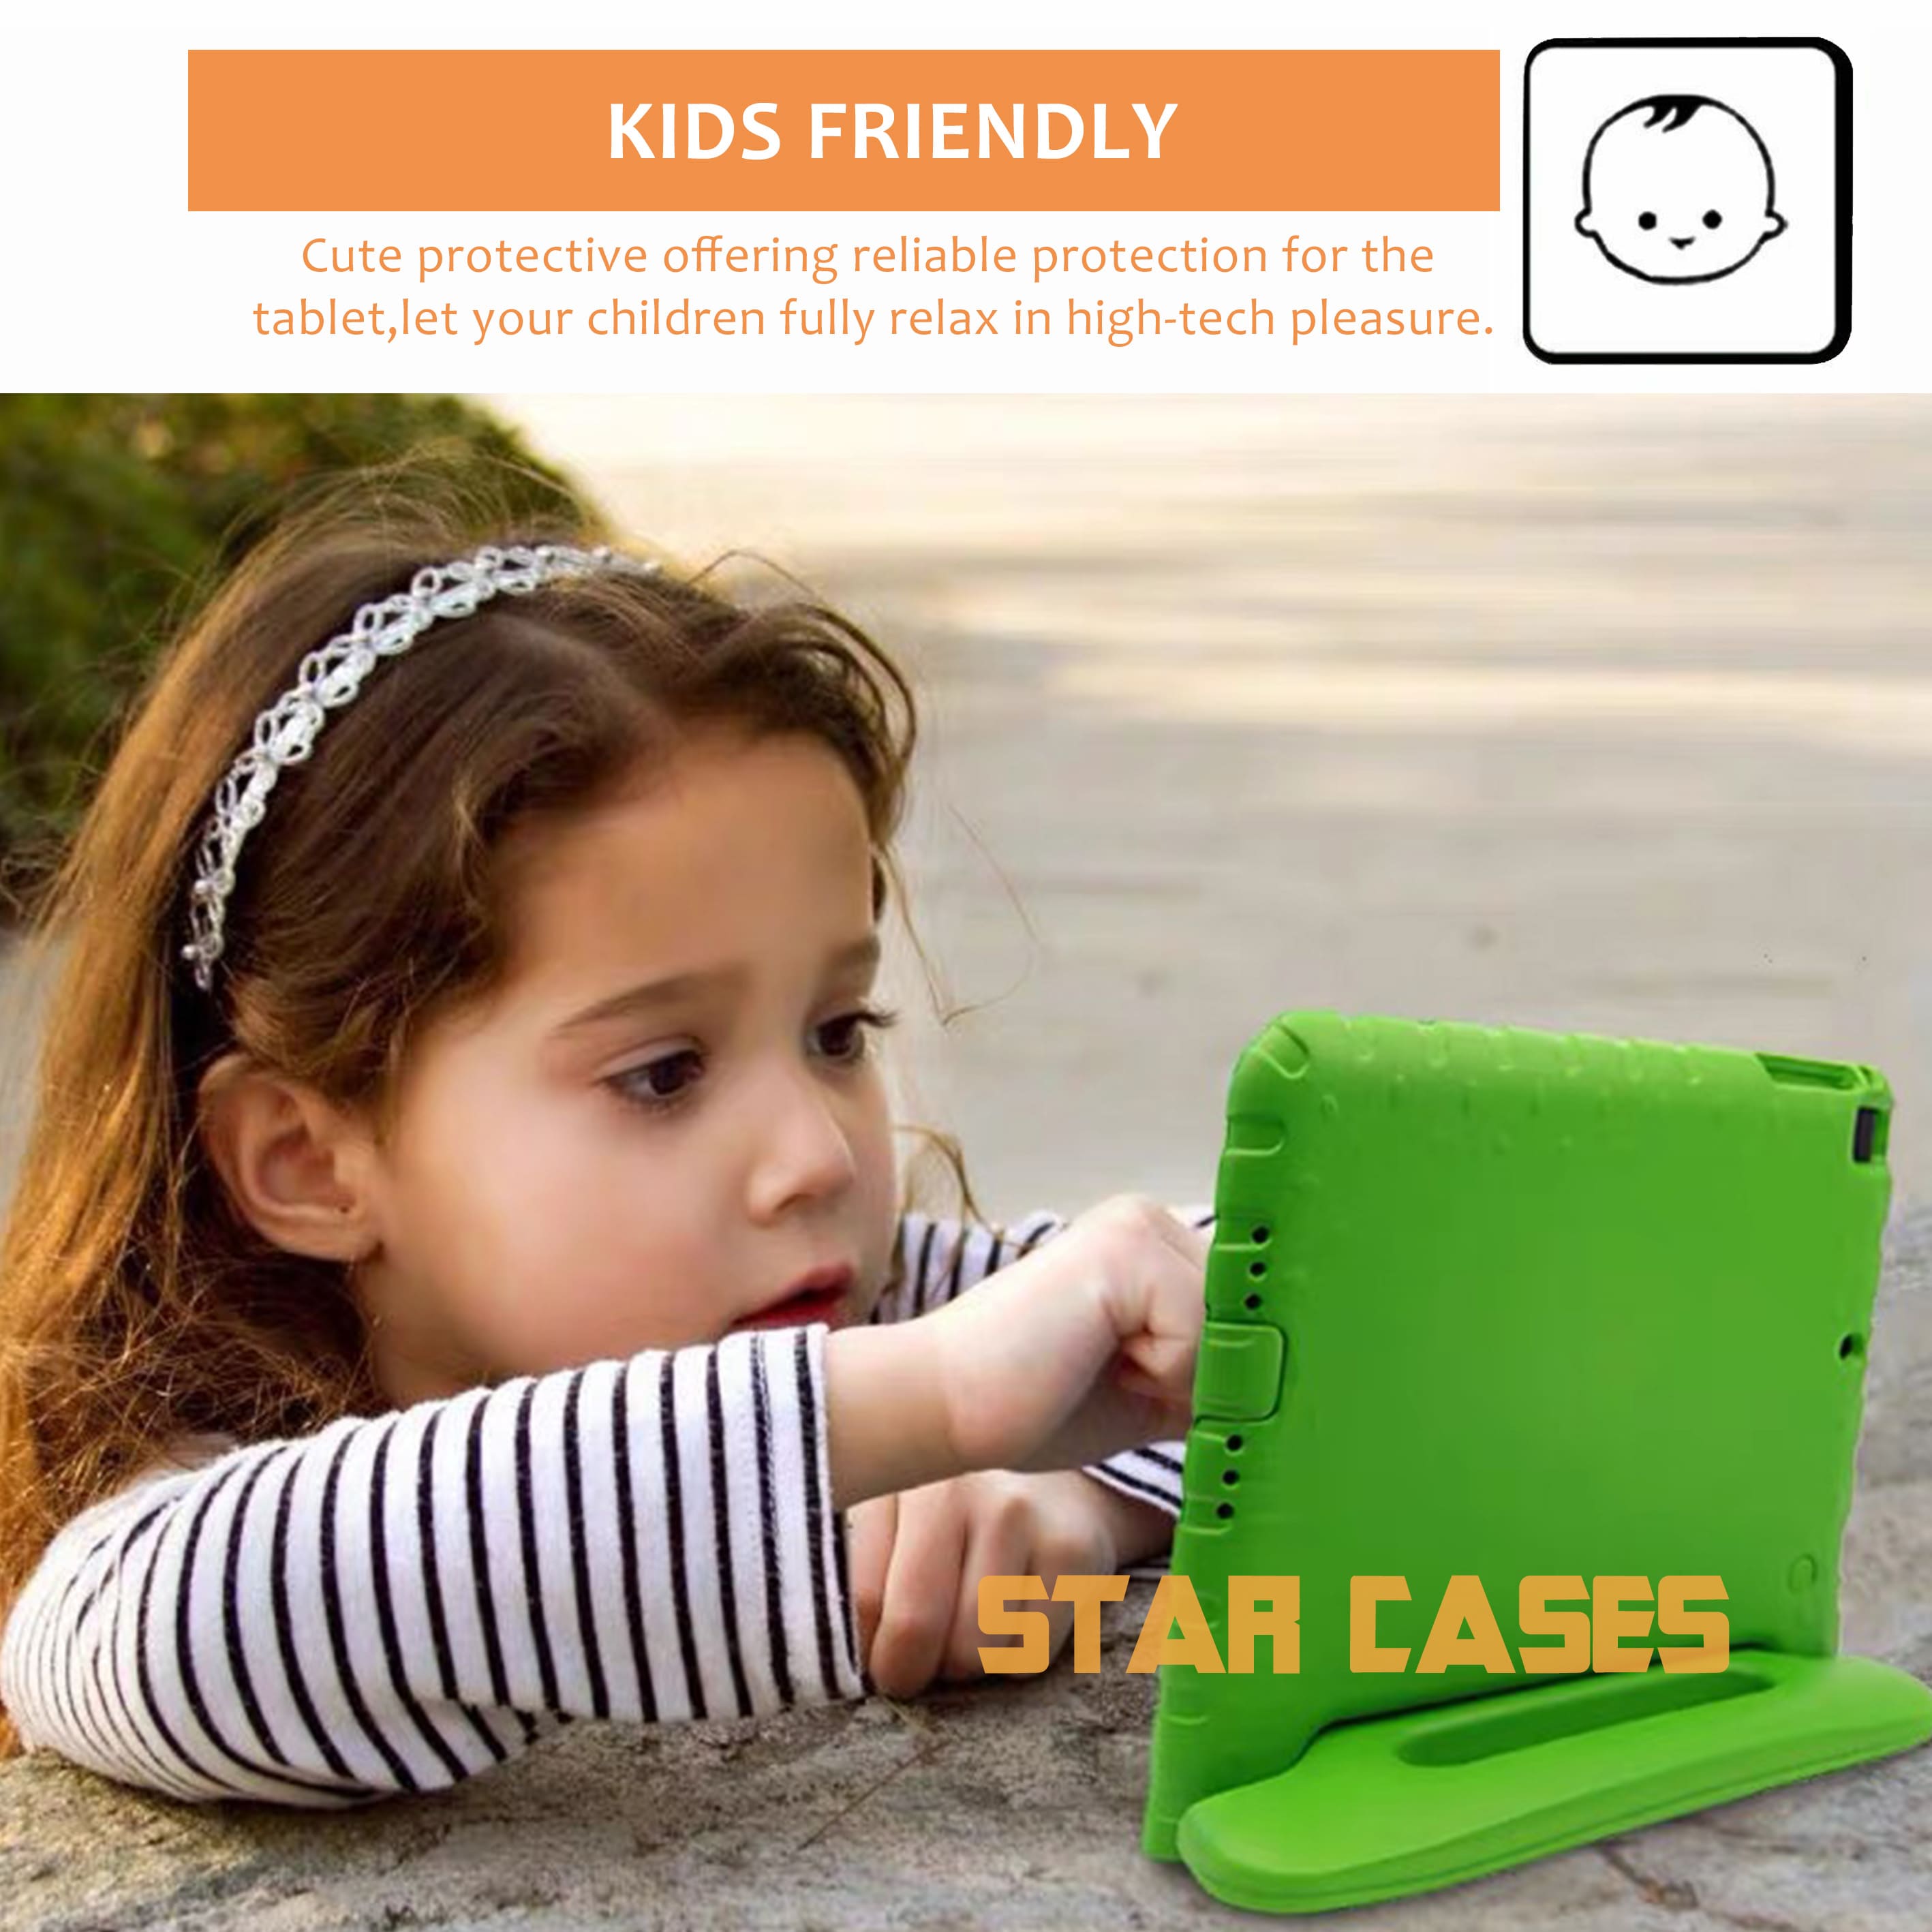 iPad 789 10.2/Air 3 Kids Handle Stand Case